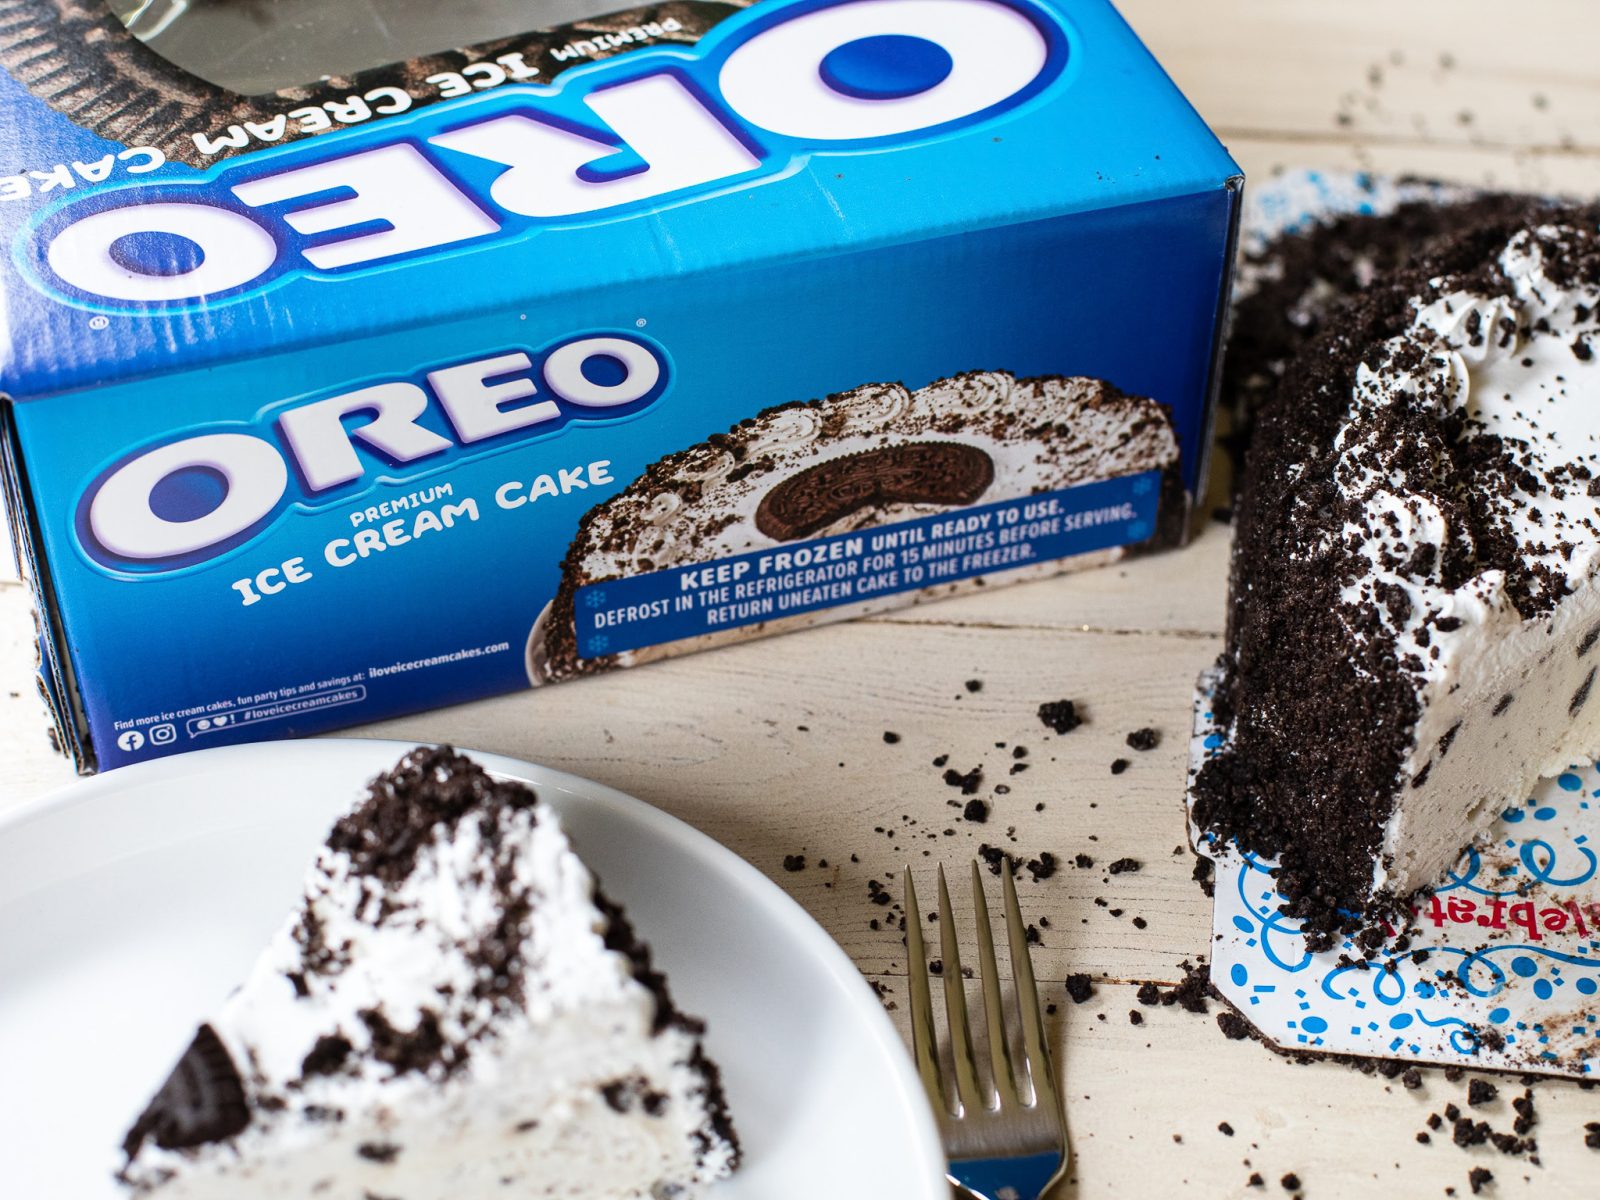 Oreo Ice Cream Cake Just $13.99 At Publix – Save $7